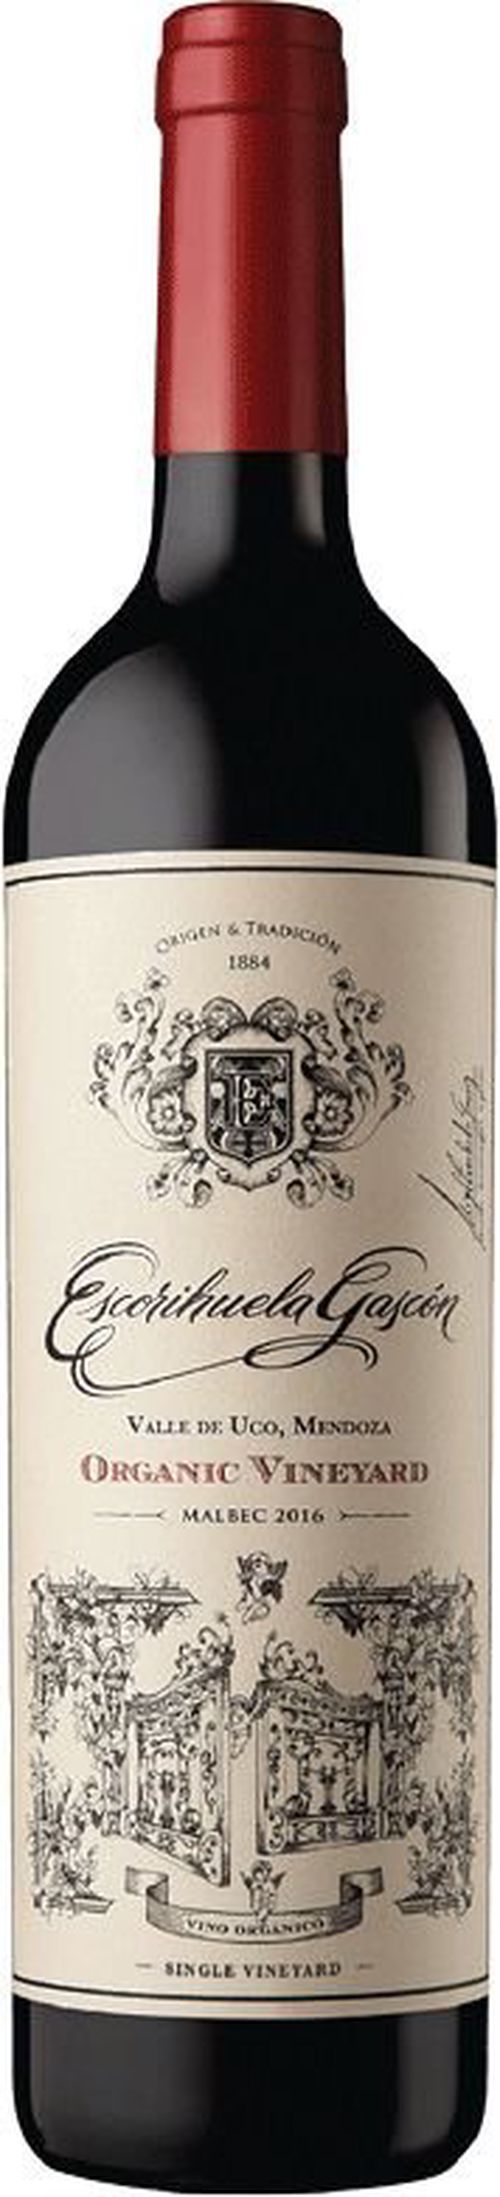 Escorihuela Gascon Organic Vineyars Malbec 2016 0,75l 12,5%